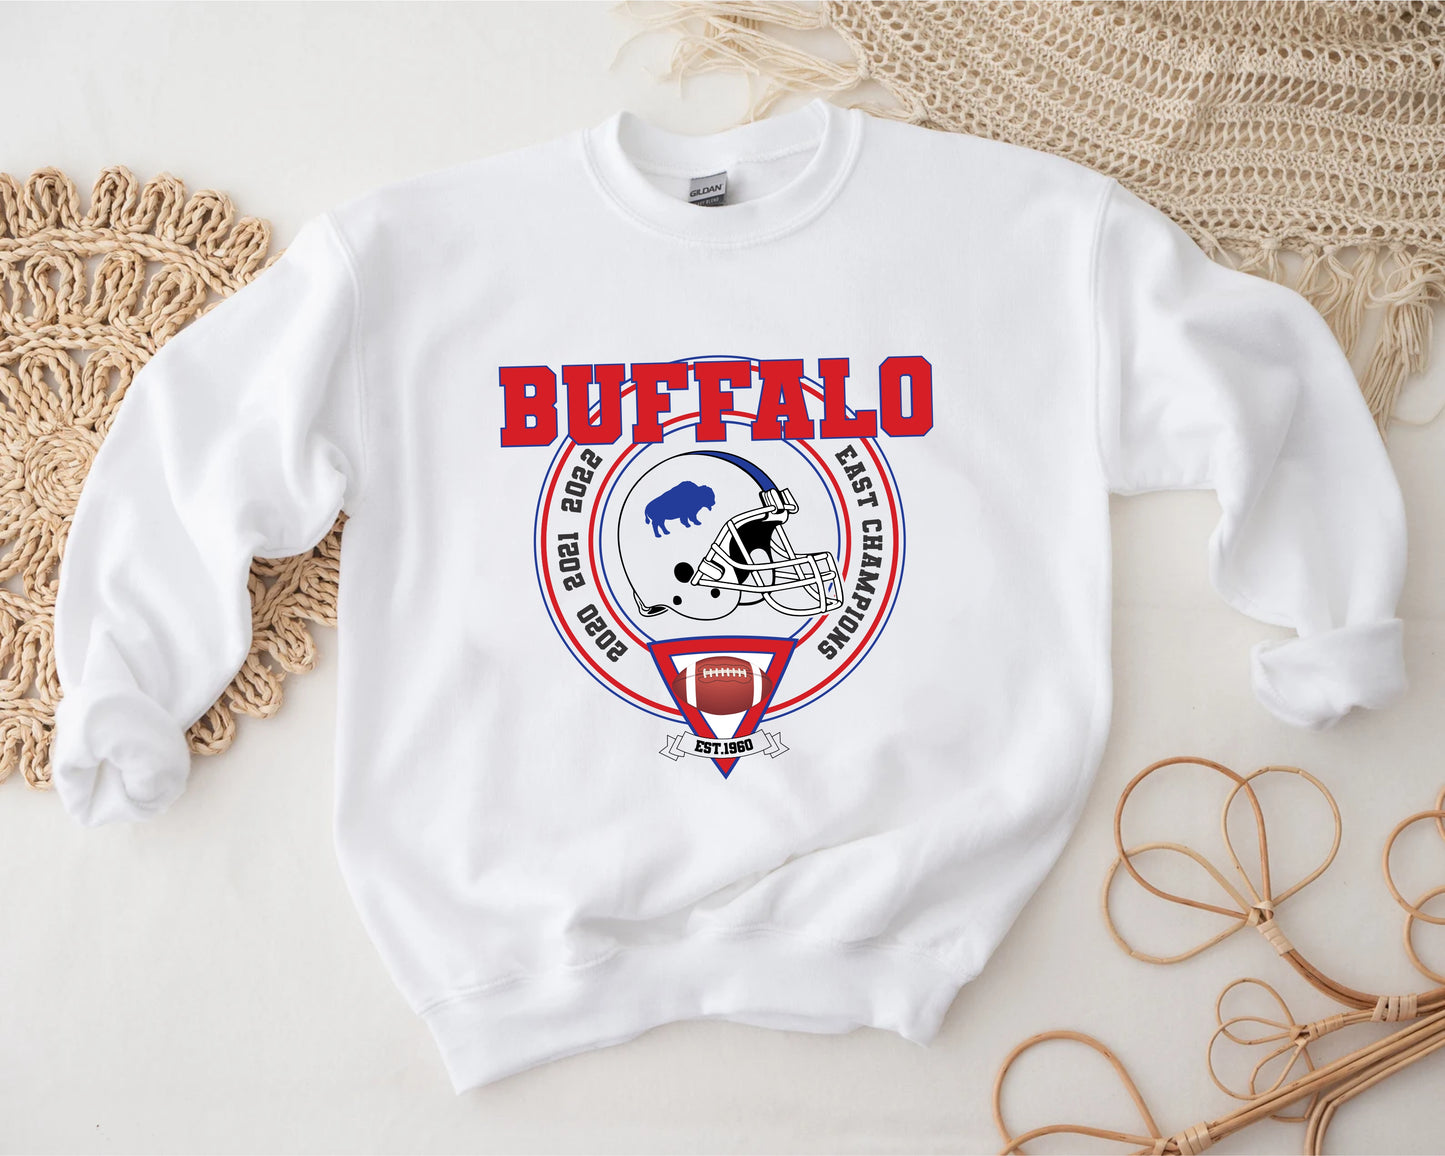 Buffalo playoff crew, Buffalo East division champions crew, Buffalo football vintage inspired sweatshirt